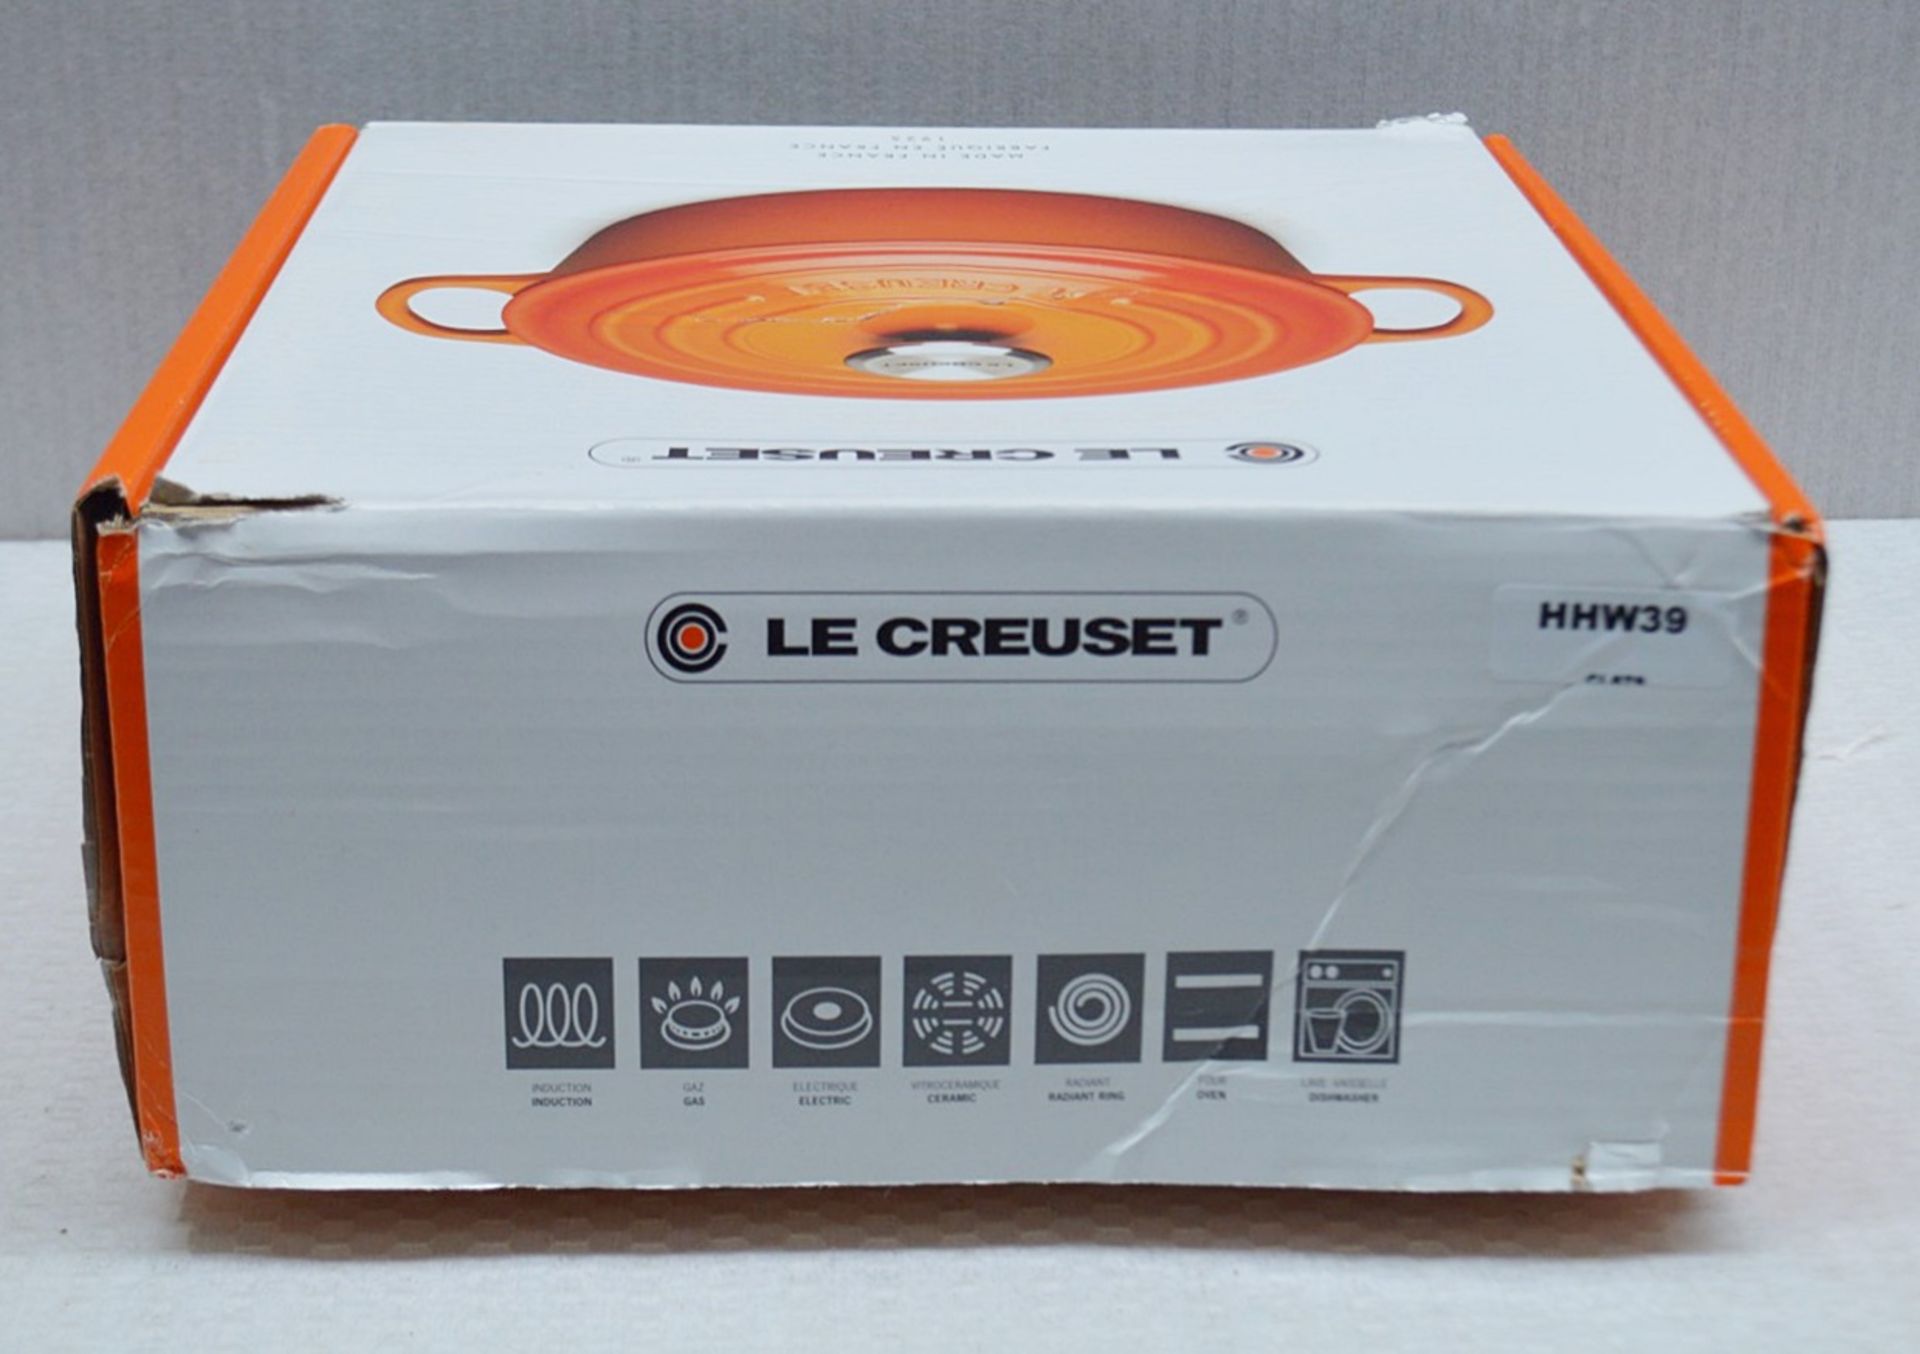 1 x Le Creuset Enamelled Cast Iron 28cm Casserole Dish In Volcanic Flame Orange - RRP £305.00 - Image 2 of 6